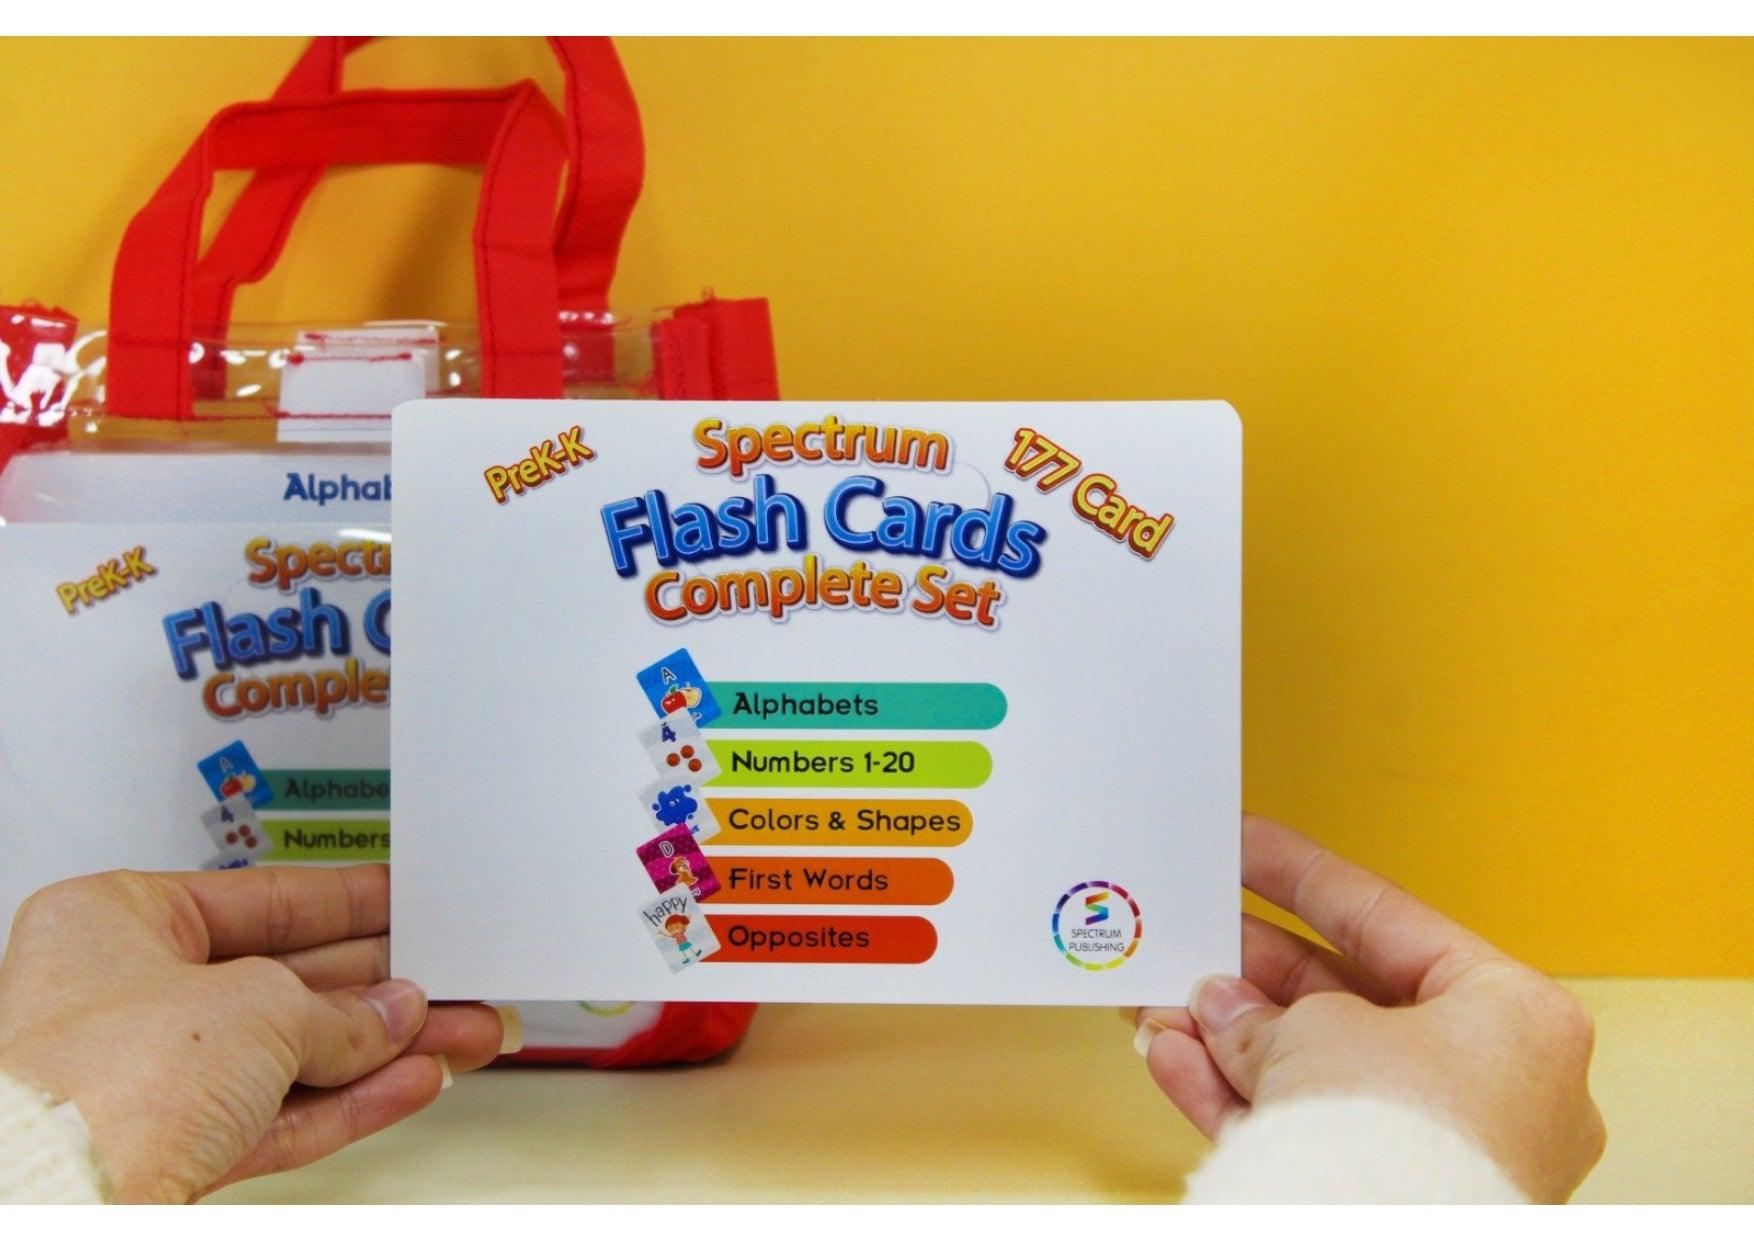 spectrum flash card complete set - Ourkids - Spectrum Publishing